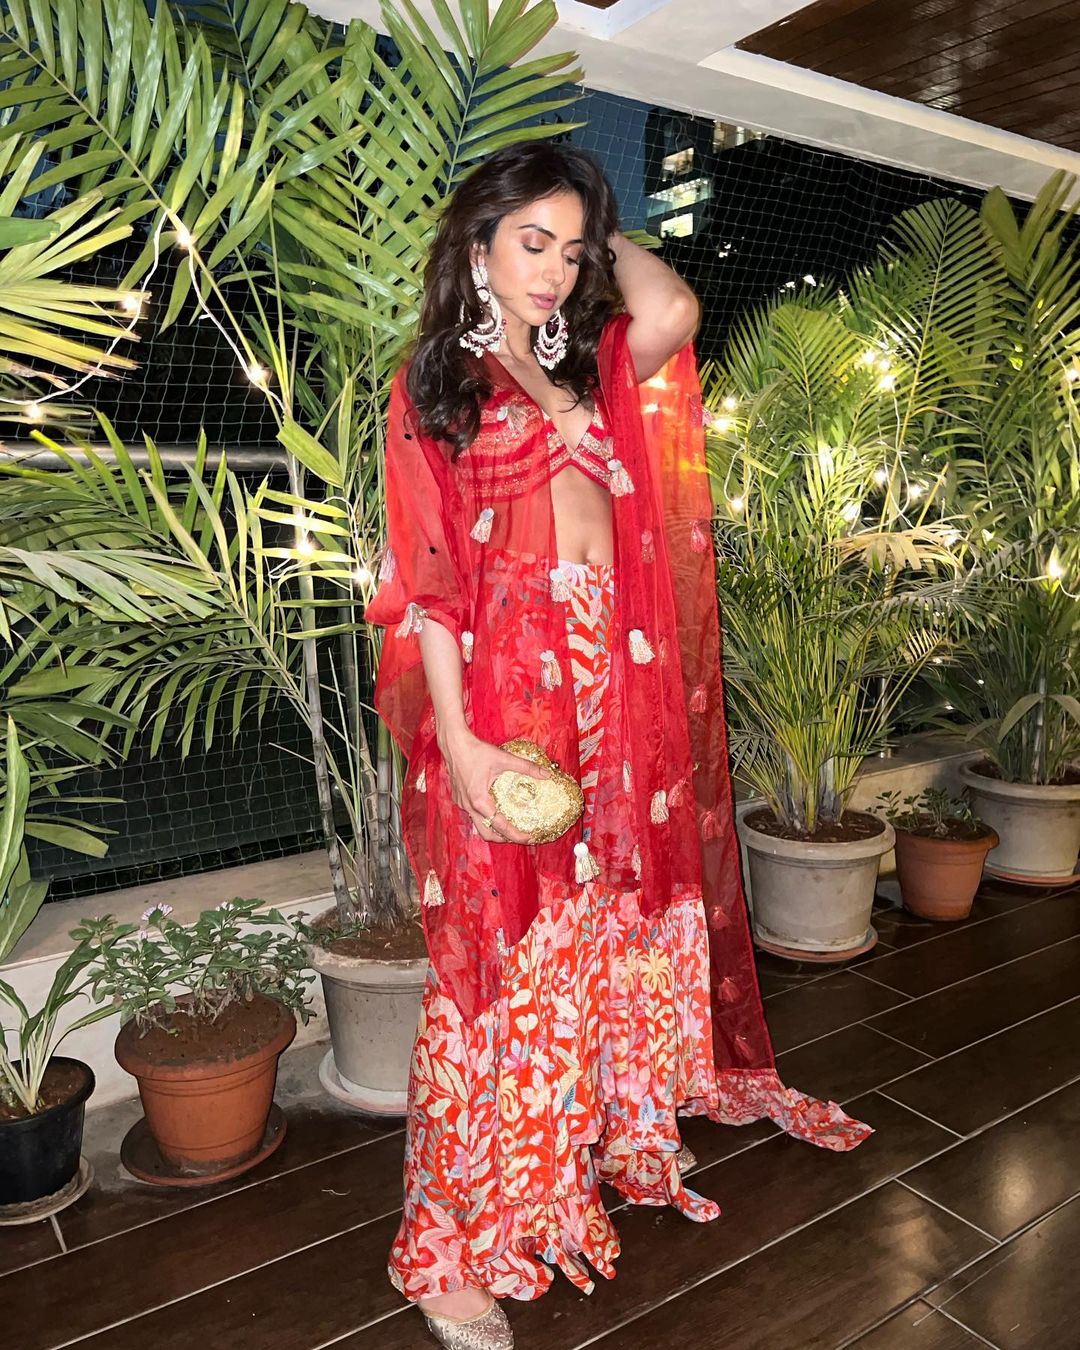 rakul preet singh hot photos in glamour dress getting viral